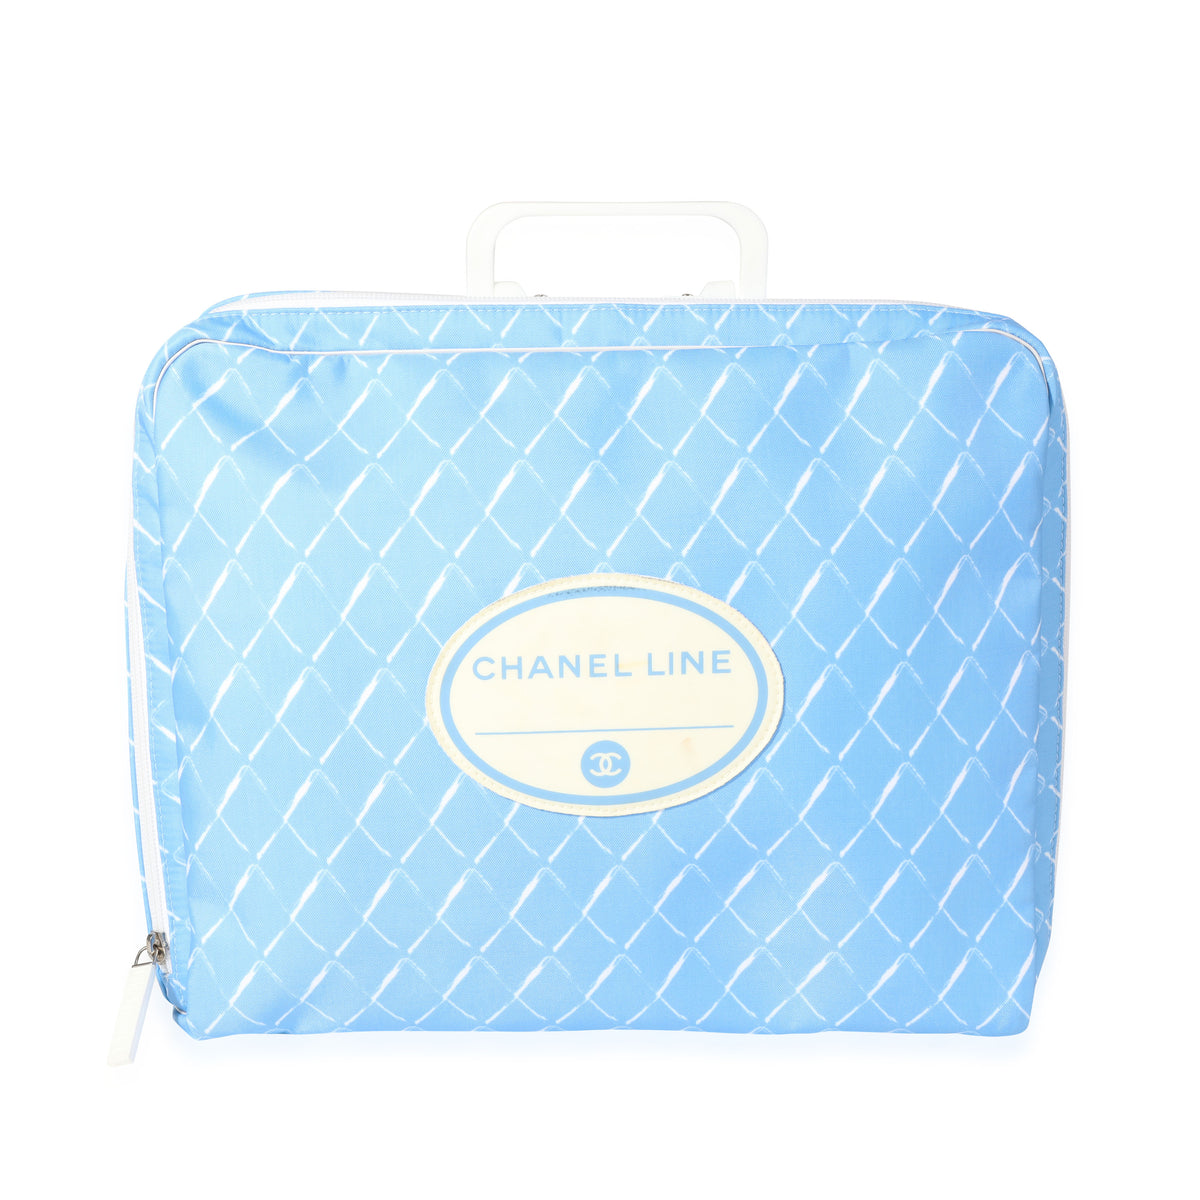 Chanel Light Blue Nylon Chanel Line Air Travel Bag